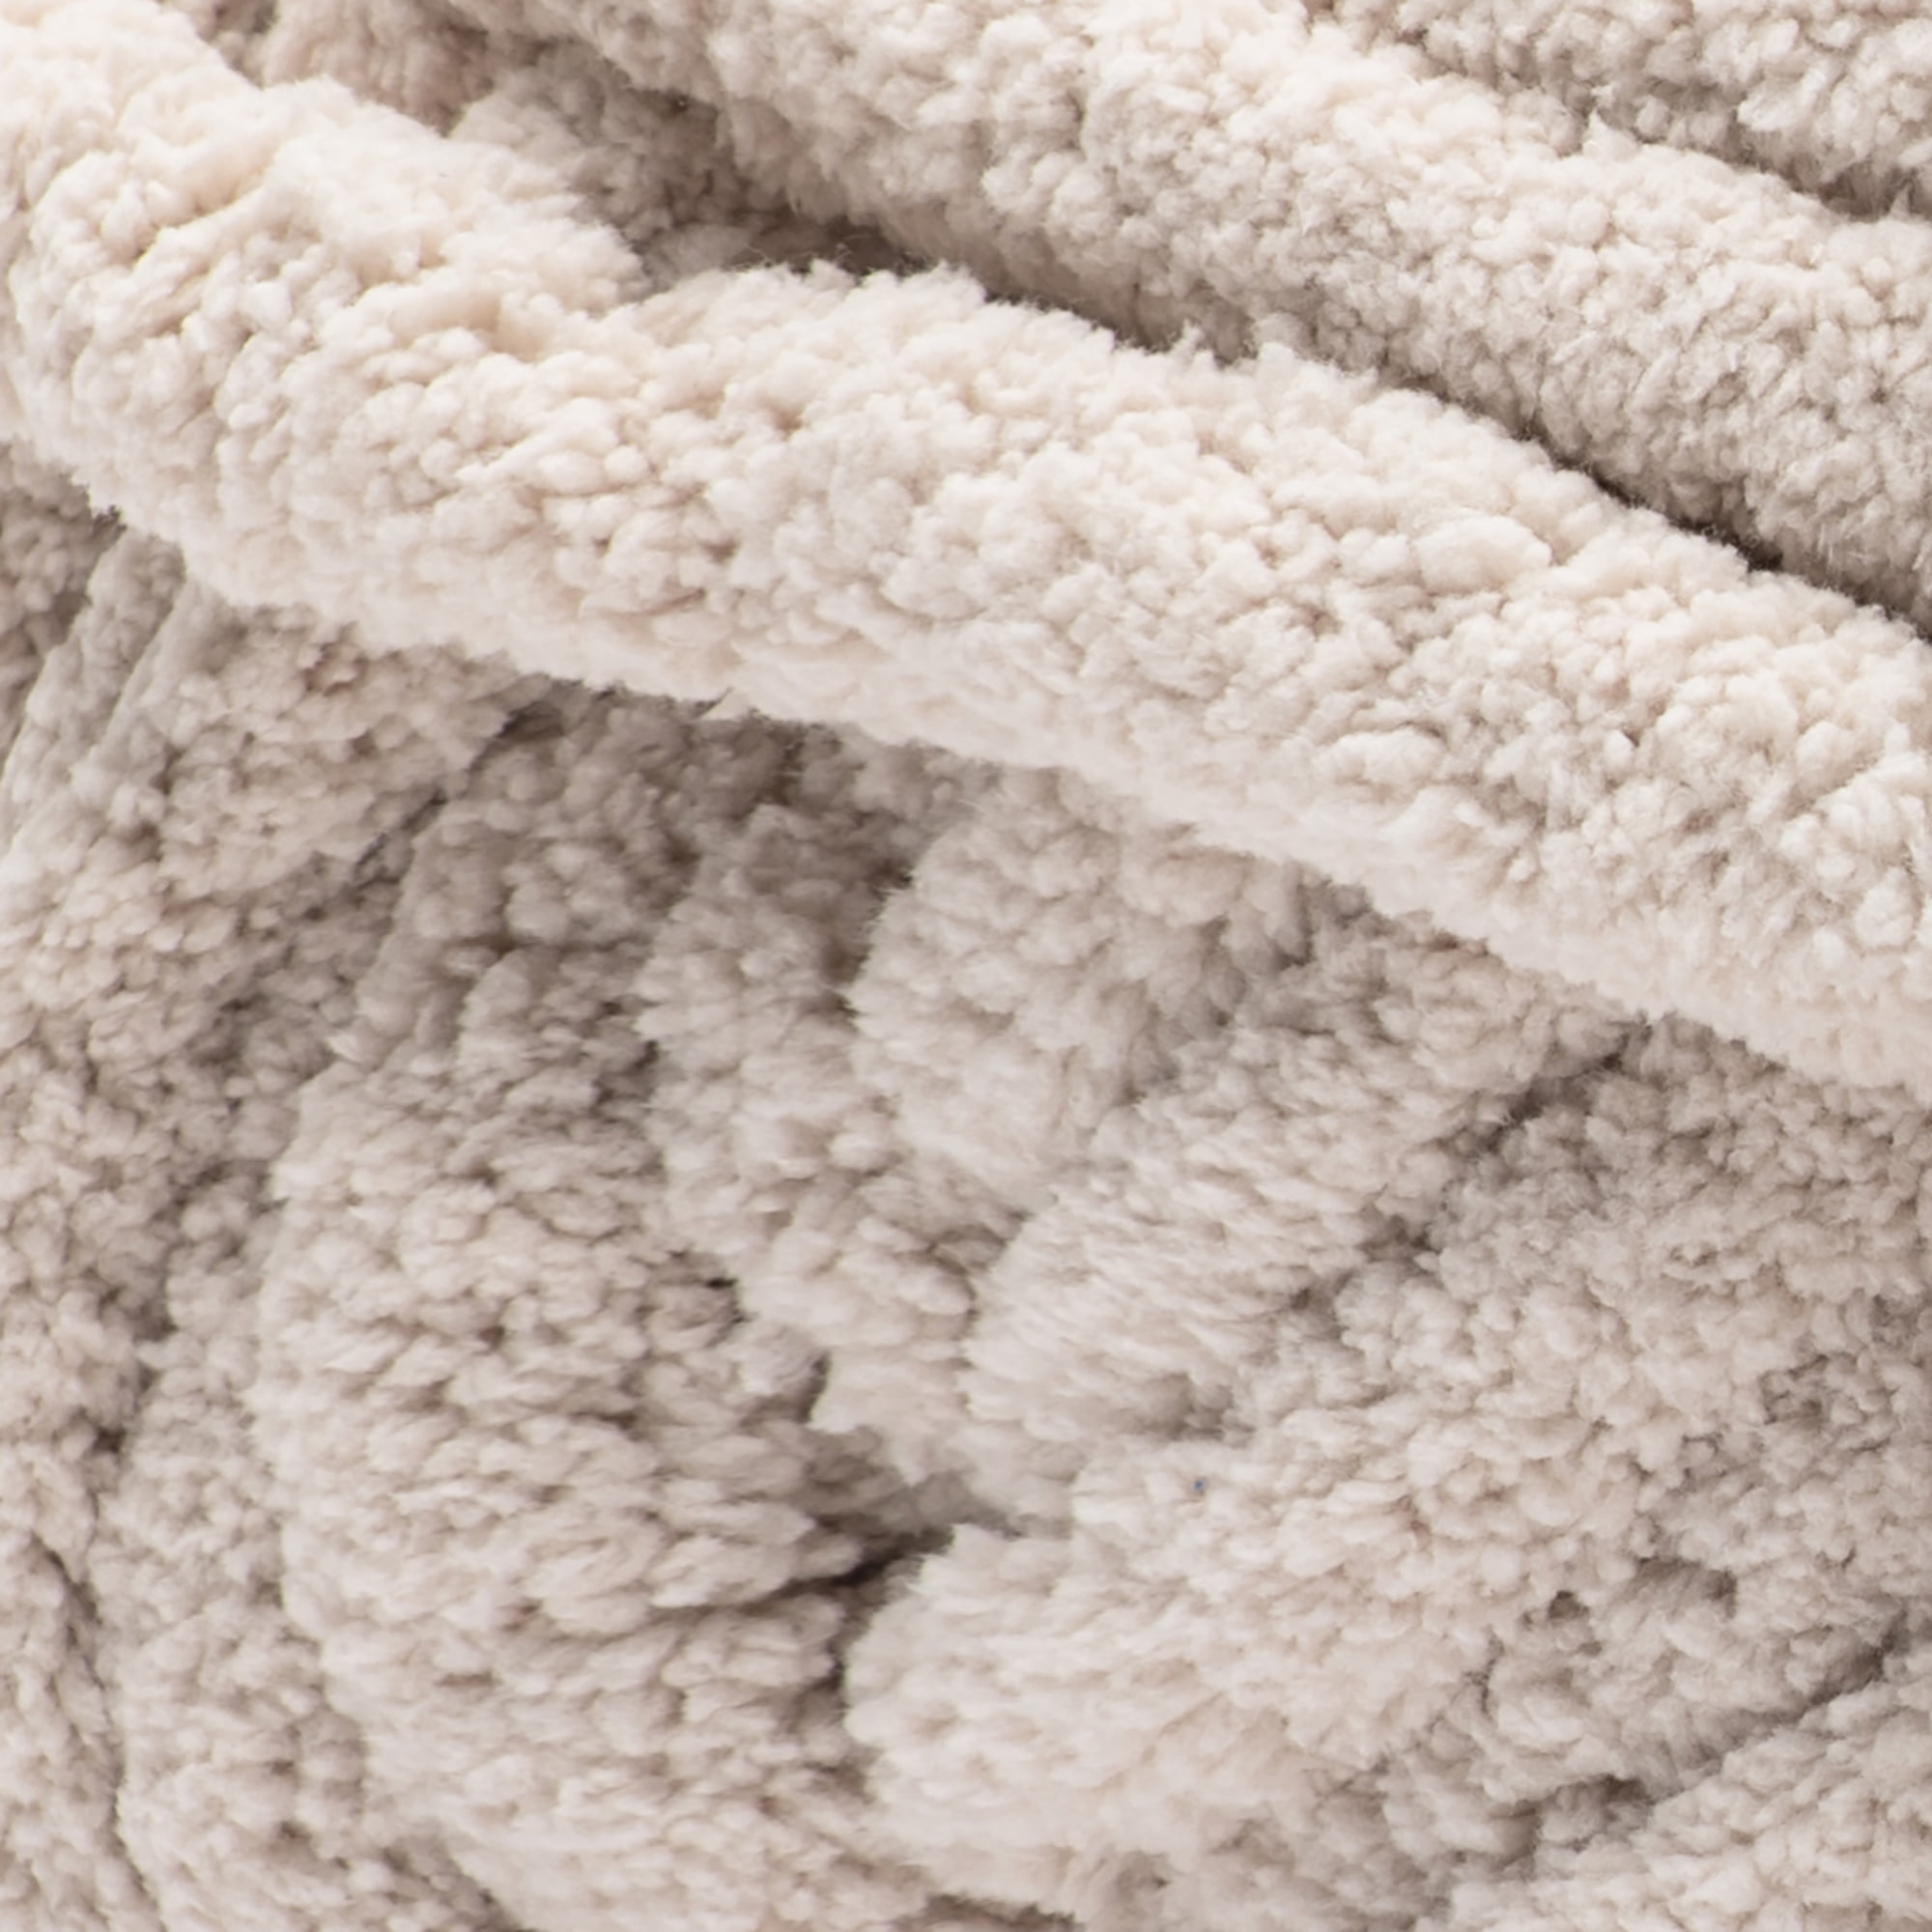 Bernat Blanket Extra Thick Gold Yarn - 1 Pack of 600g/21oz - Polyester - 7  Jumbo - Knitting, Crocheting, Crafts & Amigurumi, Chunky Chenille Yarn